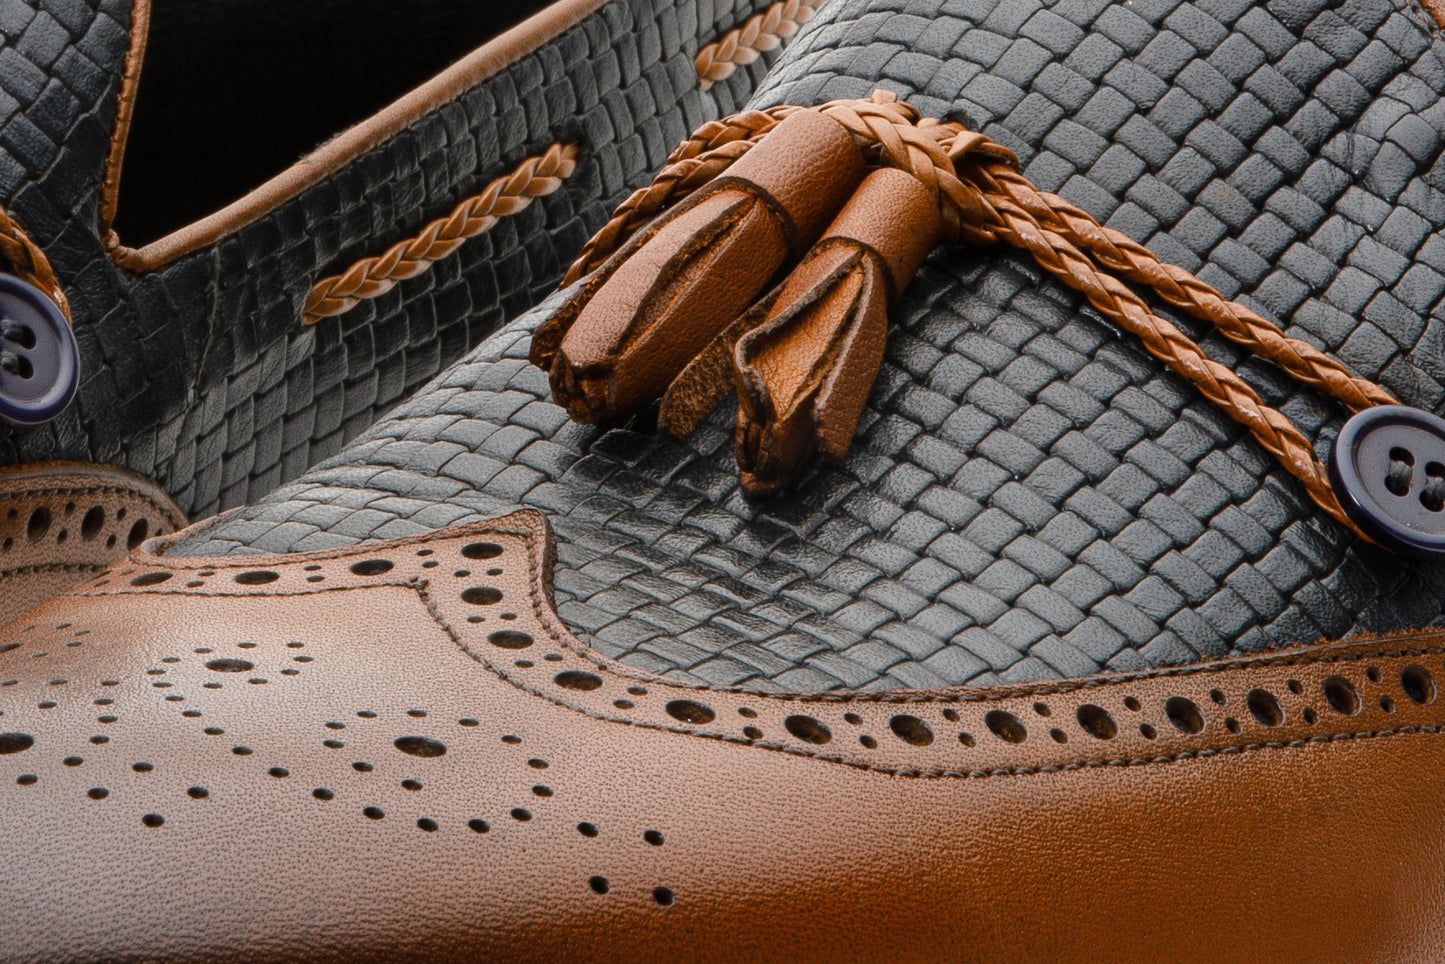 The Istanbul Tan & Navy Blue Leather Tassel Loafer Men Shoe